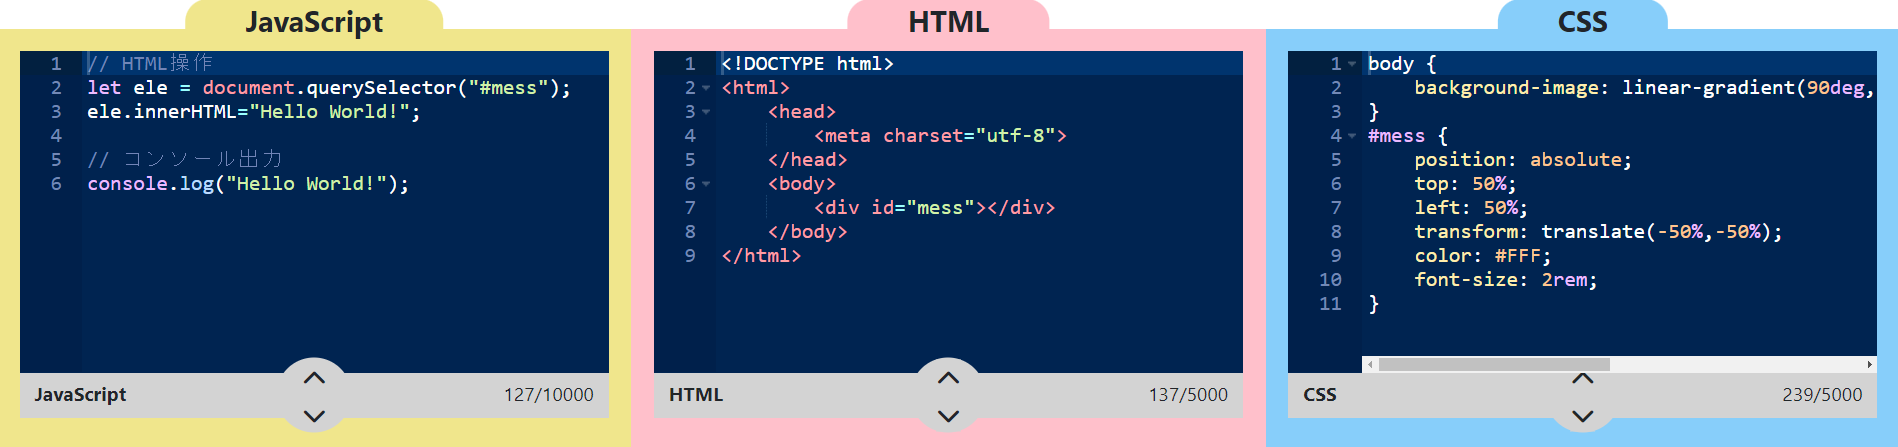 JavaScriptとHTMLとCSSのエディタイメージ